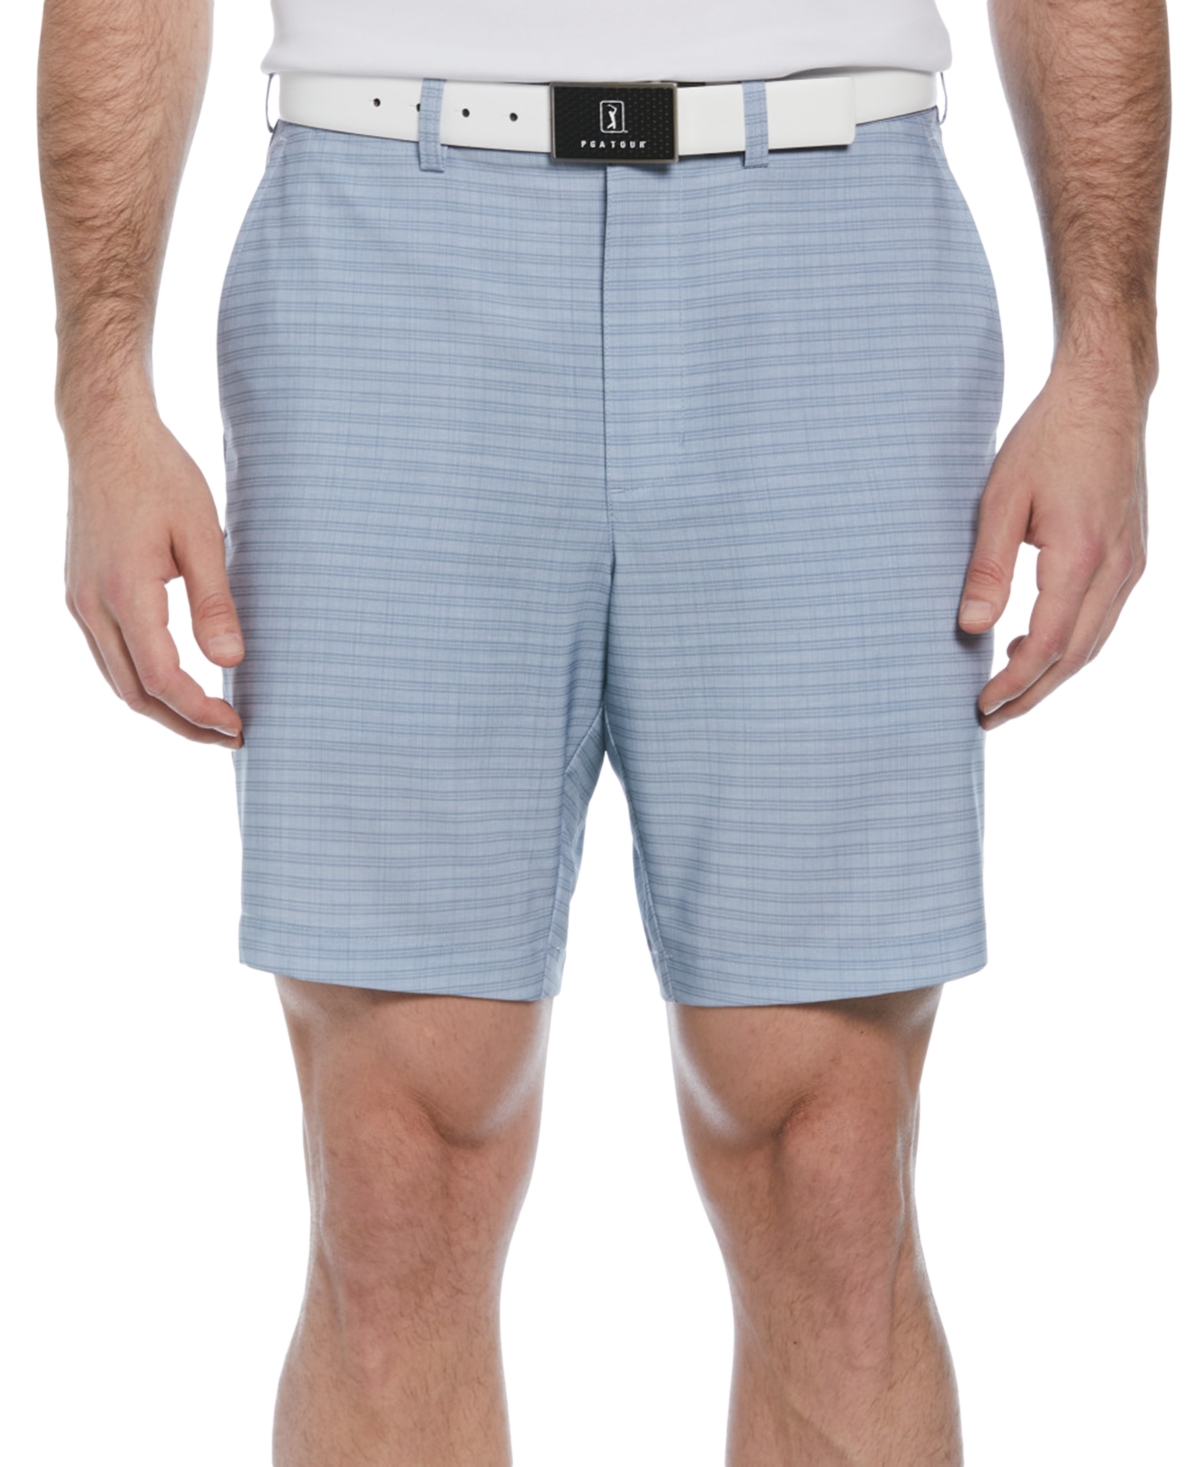 Men's Striped 8" Golf Shorts - Shell Pink